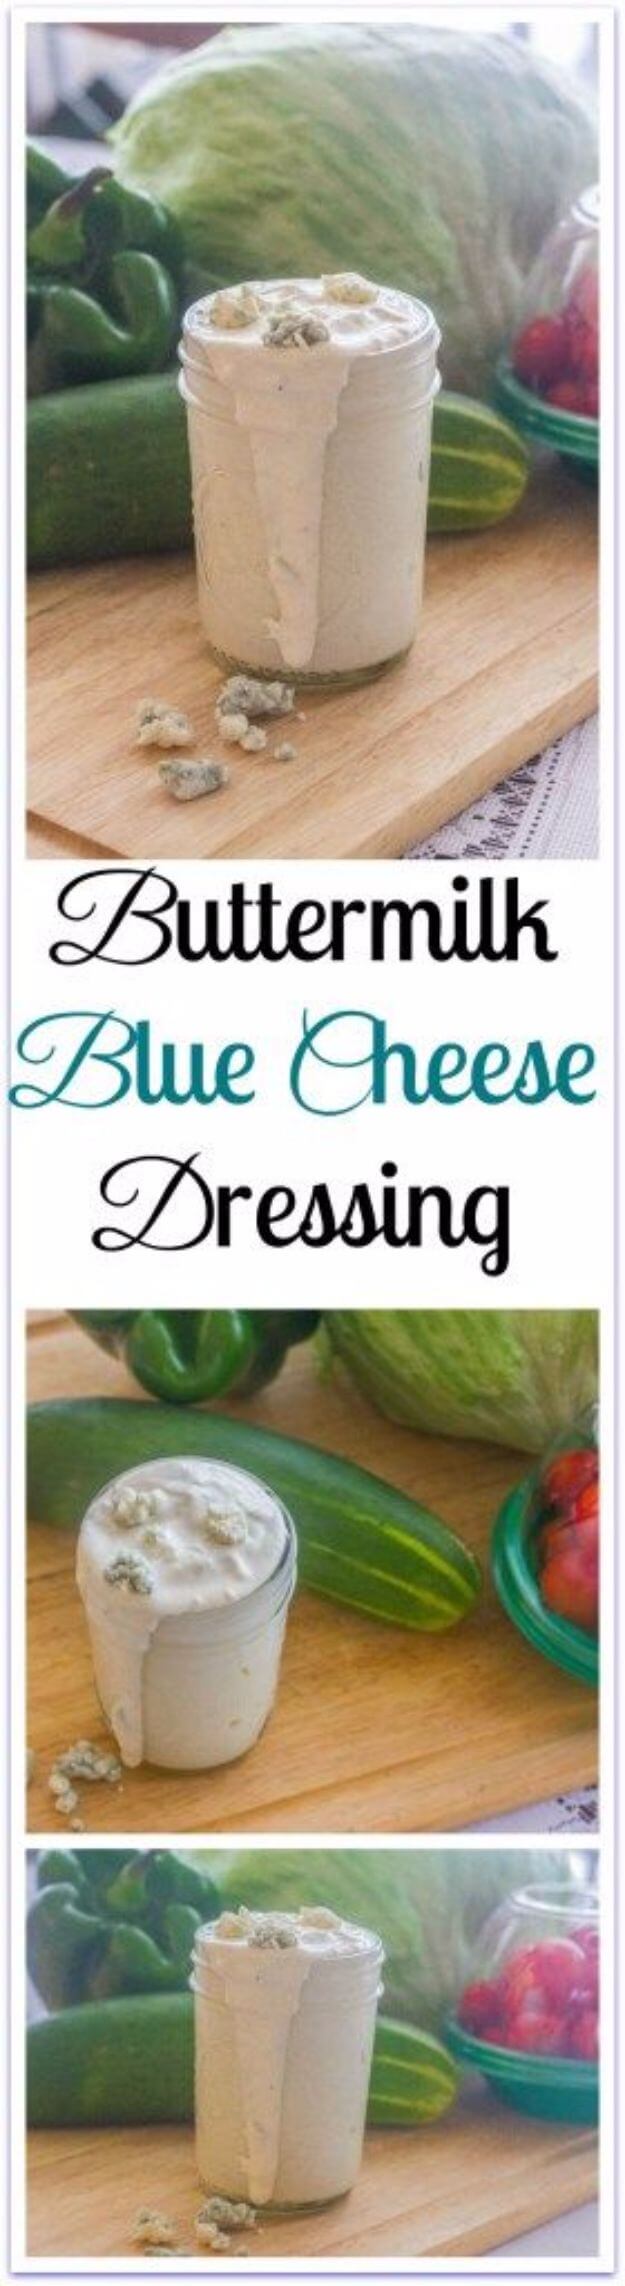  Buttermilk Blue Cheese Dressing